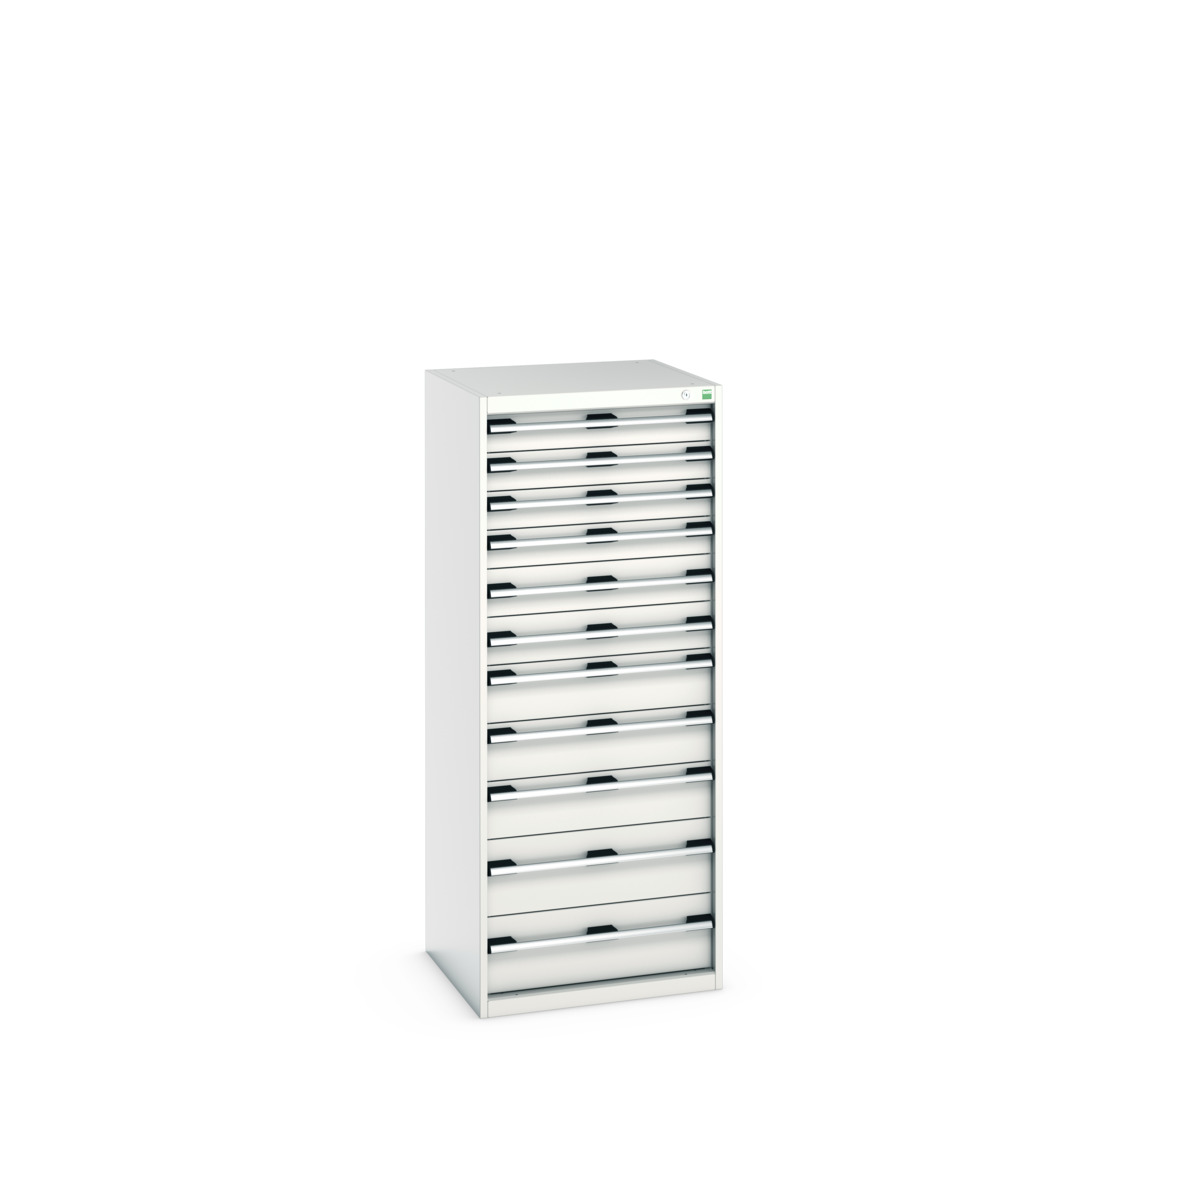 40019156.16V - cubio armoire à tiroirs SL-6616-11.1